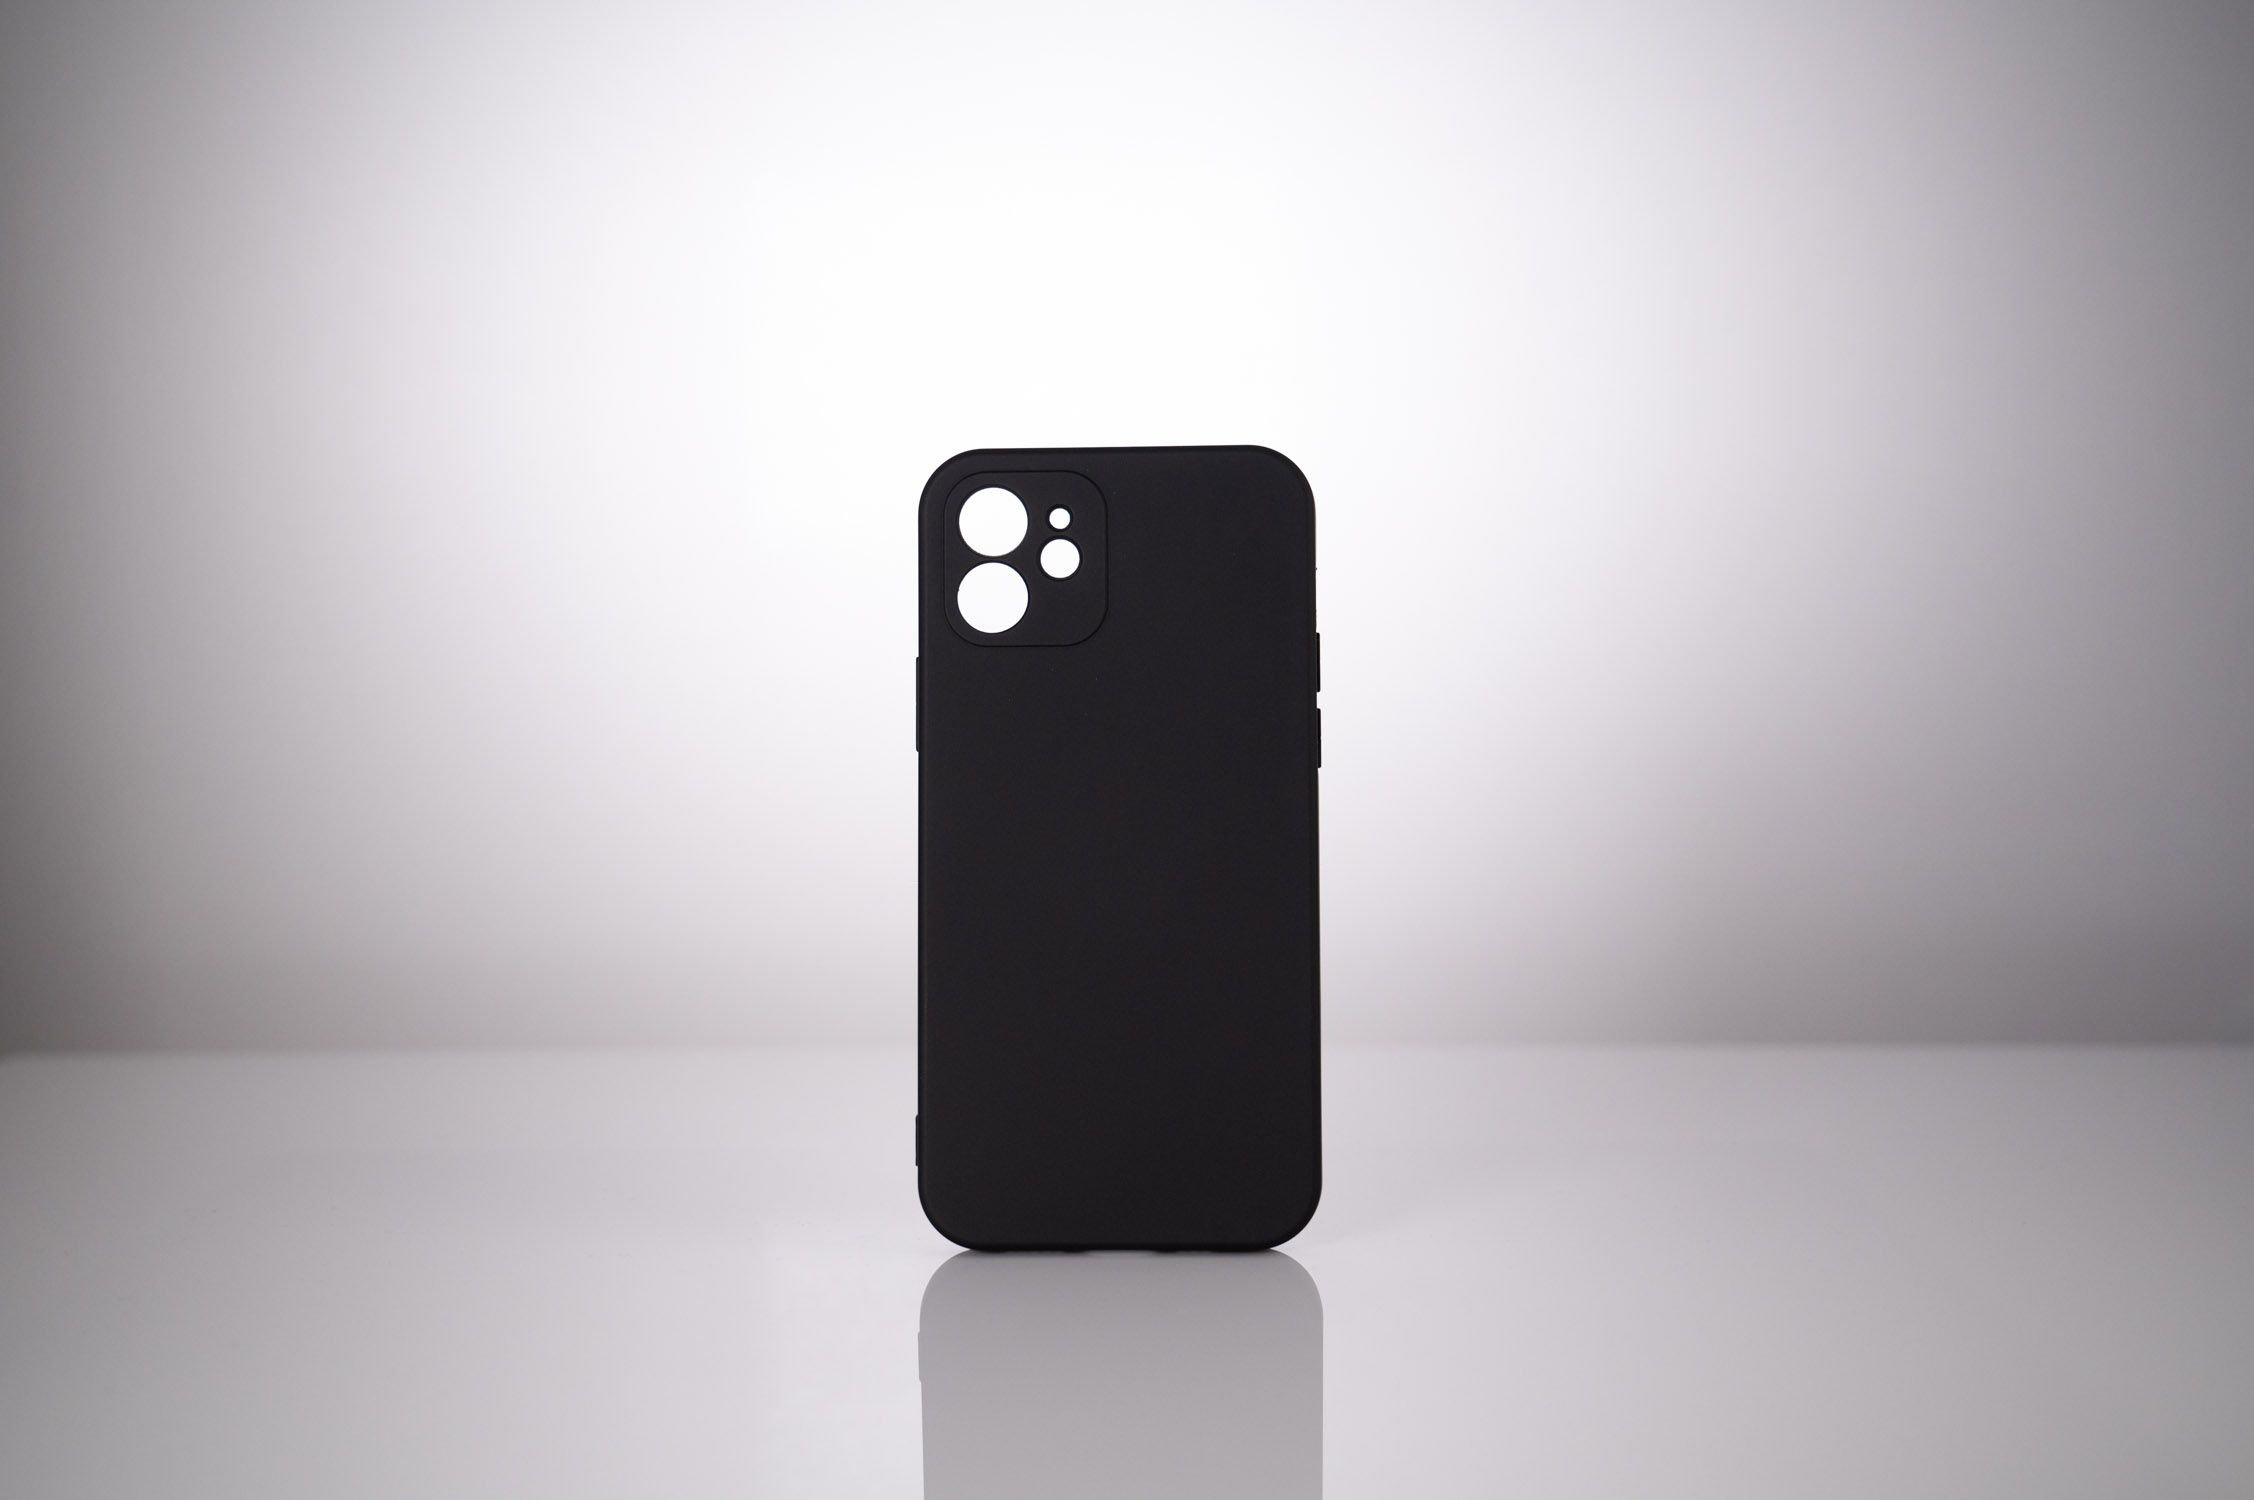 HUSA SMARTPHONE Spacer pentru Iphone 13, grosime 1.5mm, protectie suplimentara antisoc la colturi, material flexibil TPU, transparenta 